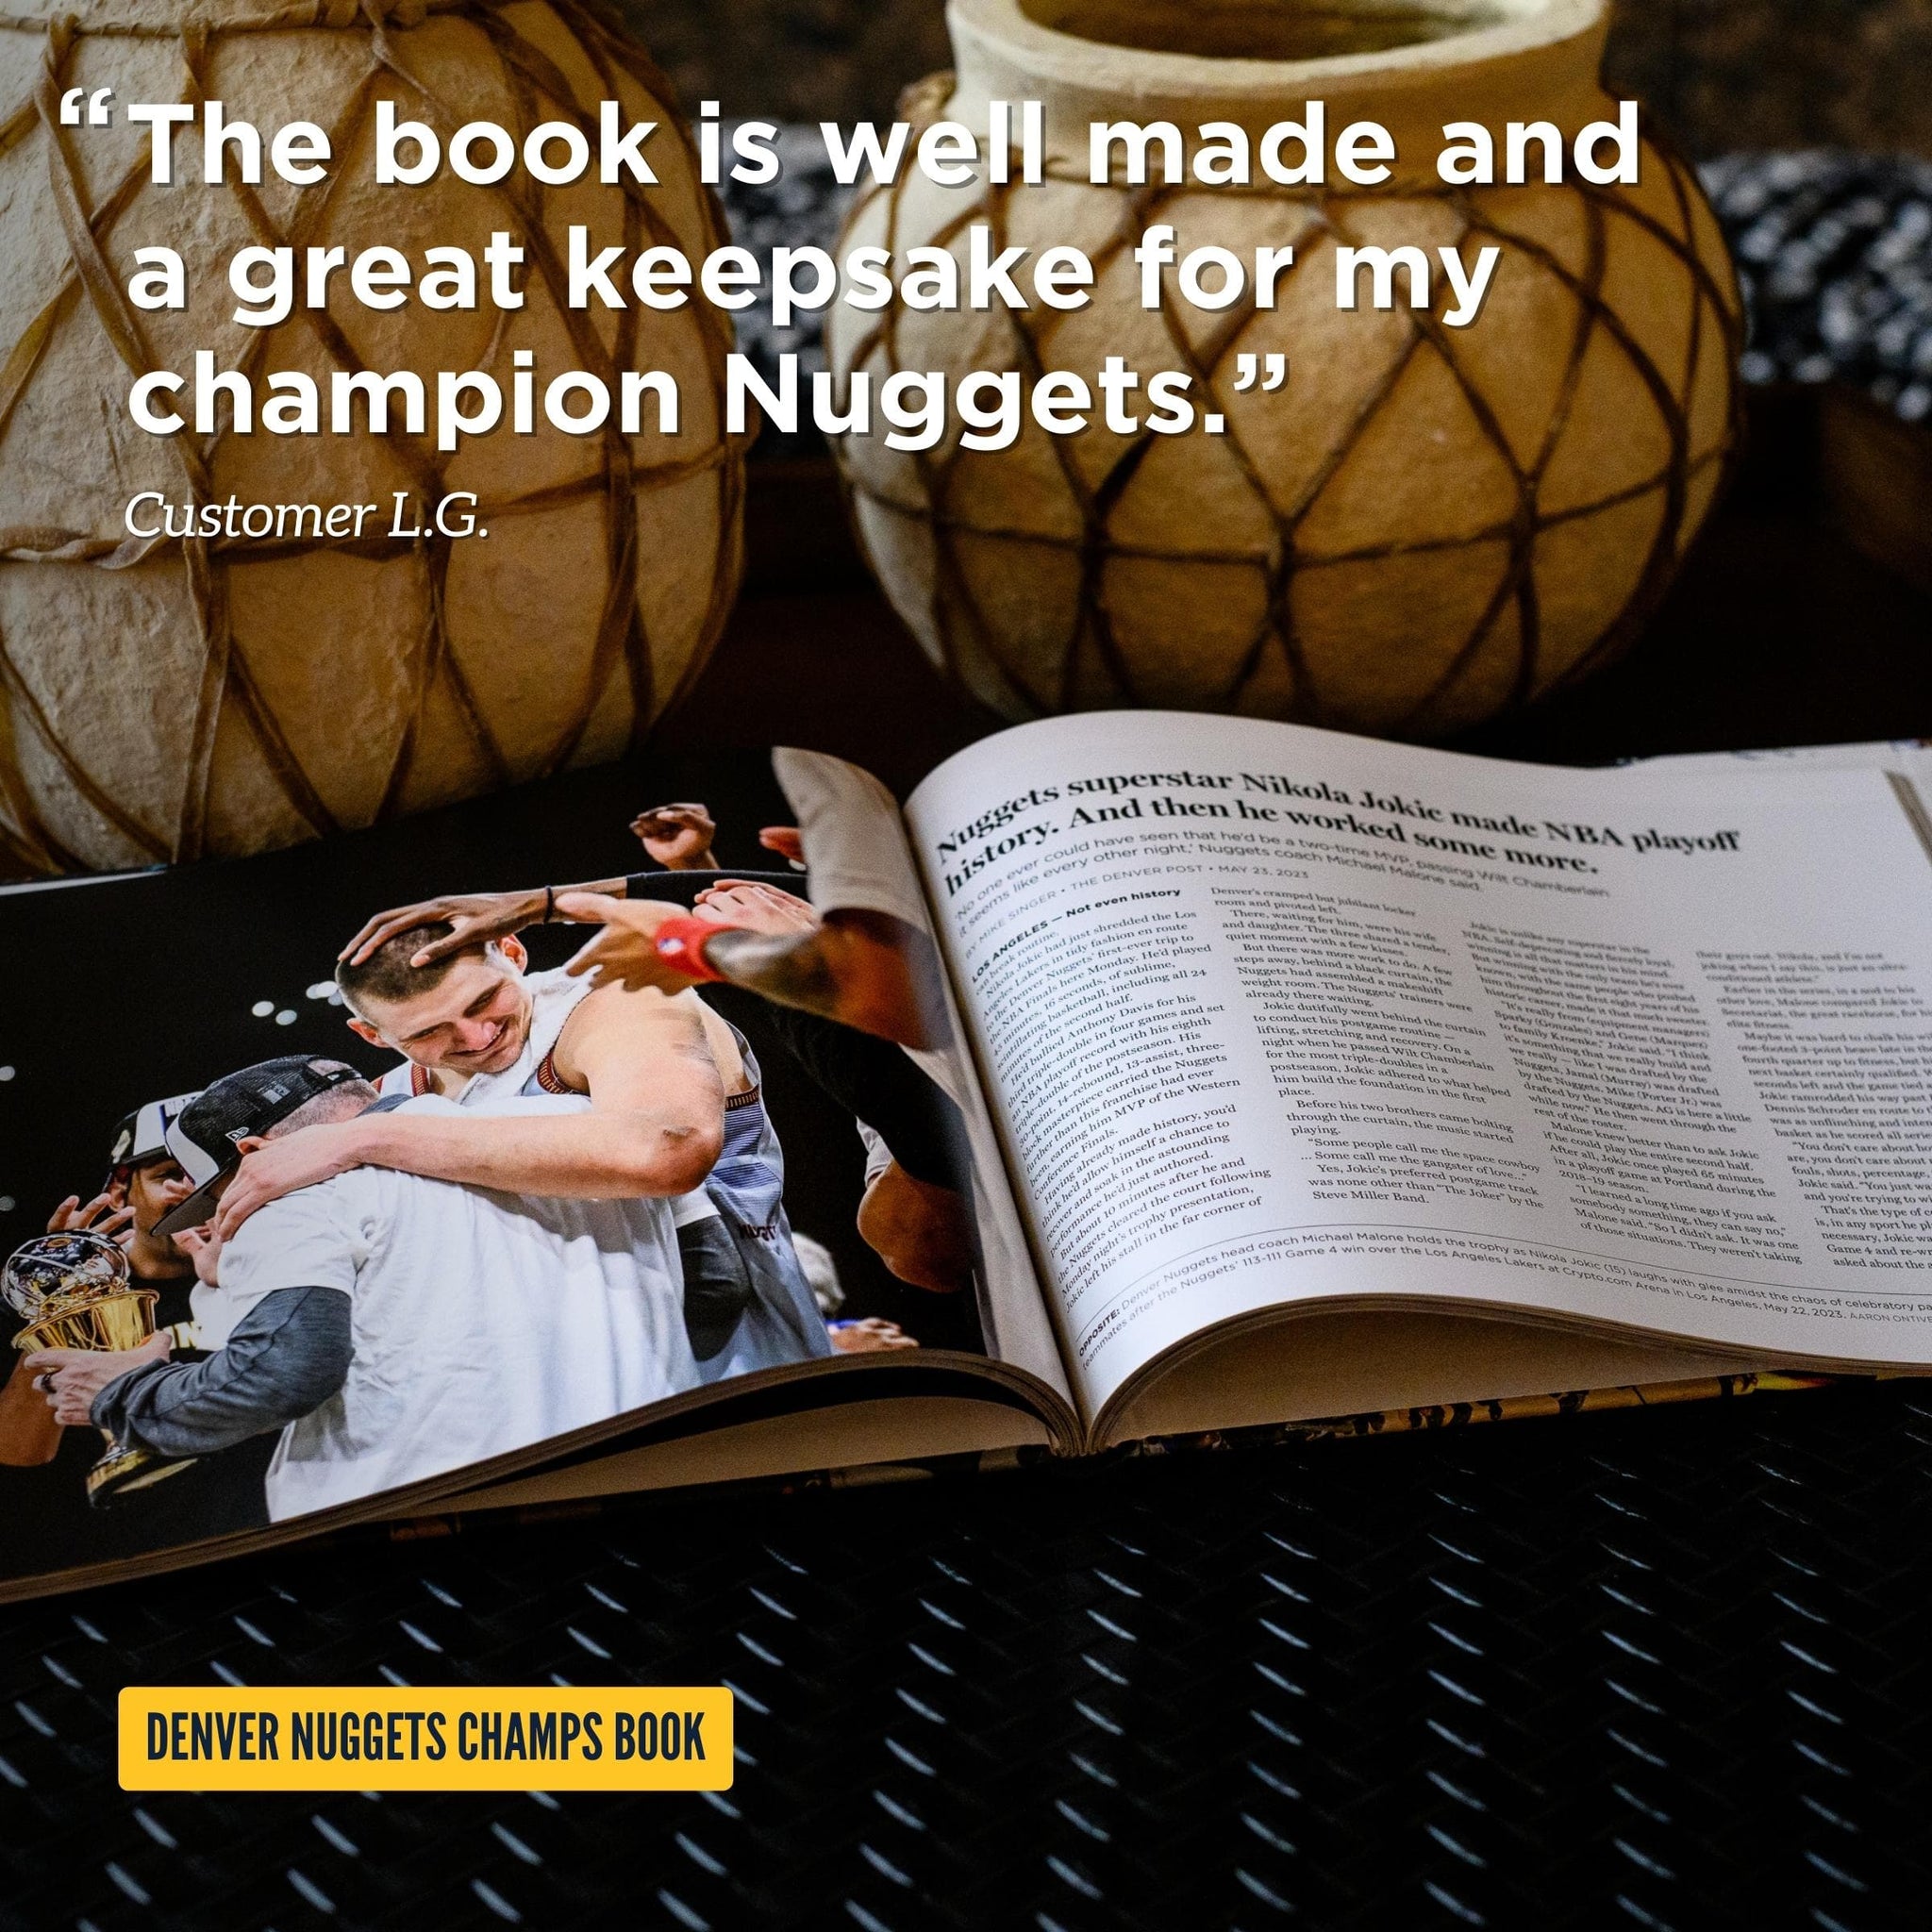 Denver Nuggets NBA Championship - Hardcover Book - Gold Standard – Pediment  Publishing